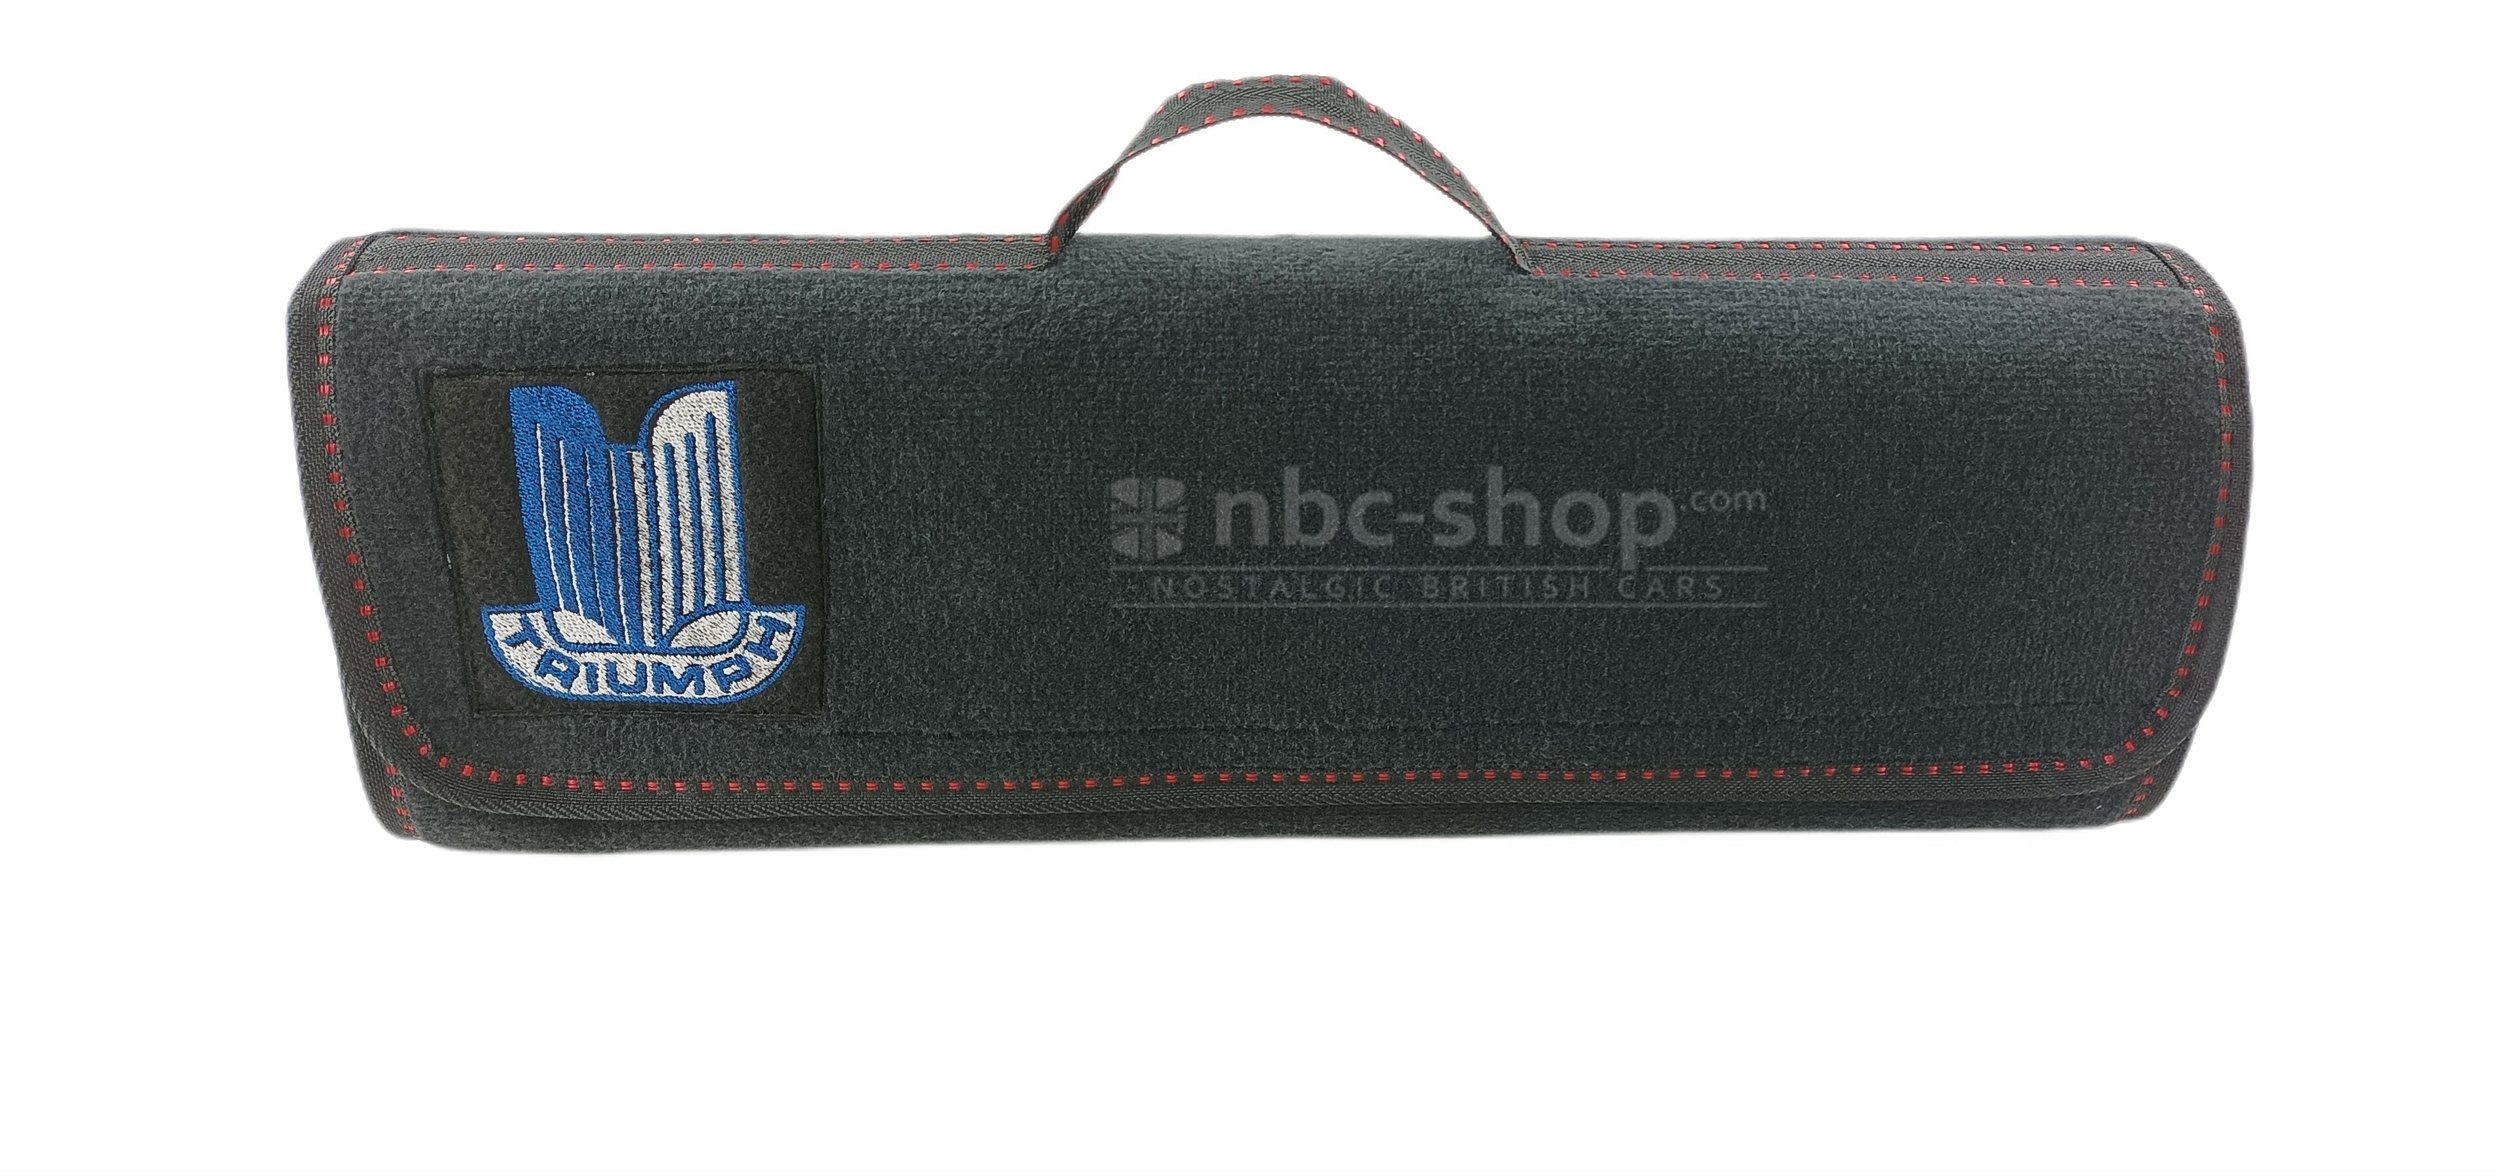 sac de coffre logo Triumph TR nbc-shop